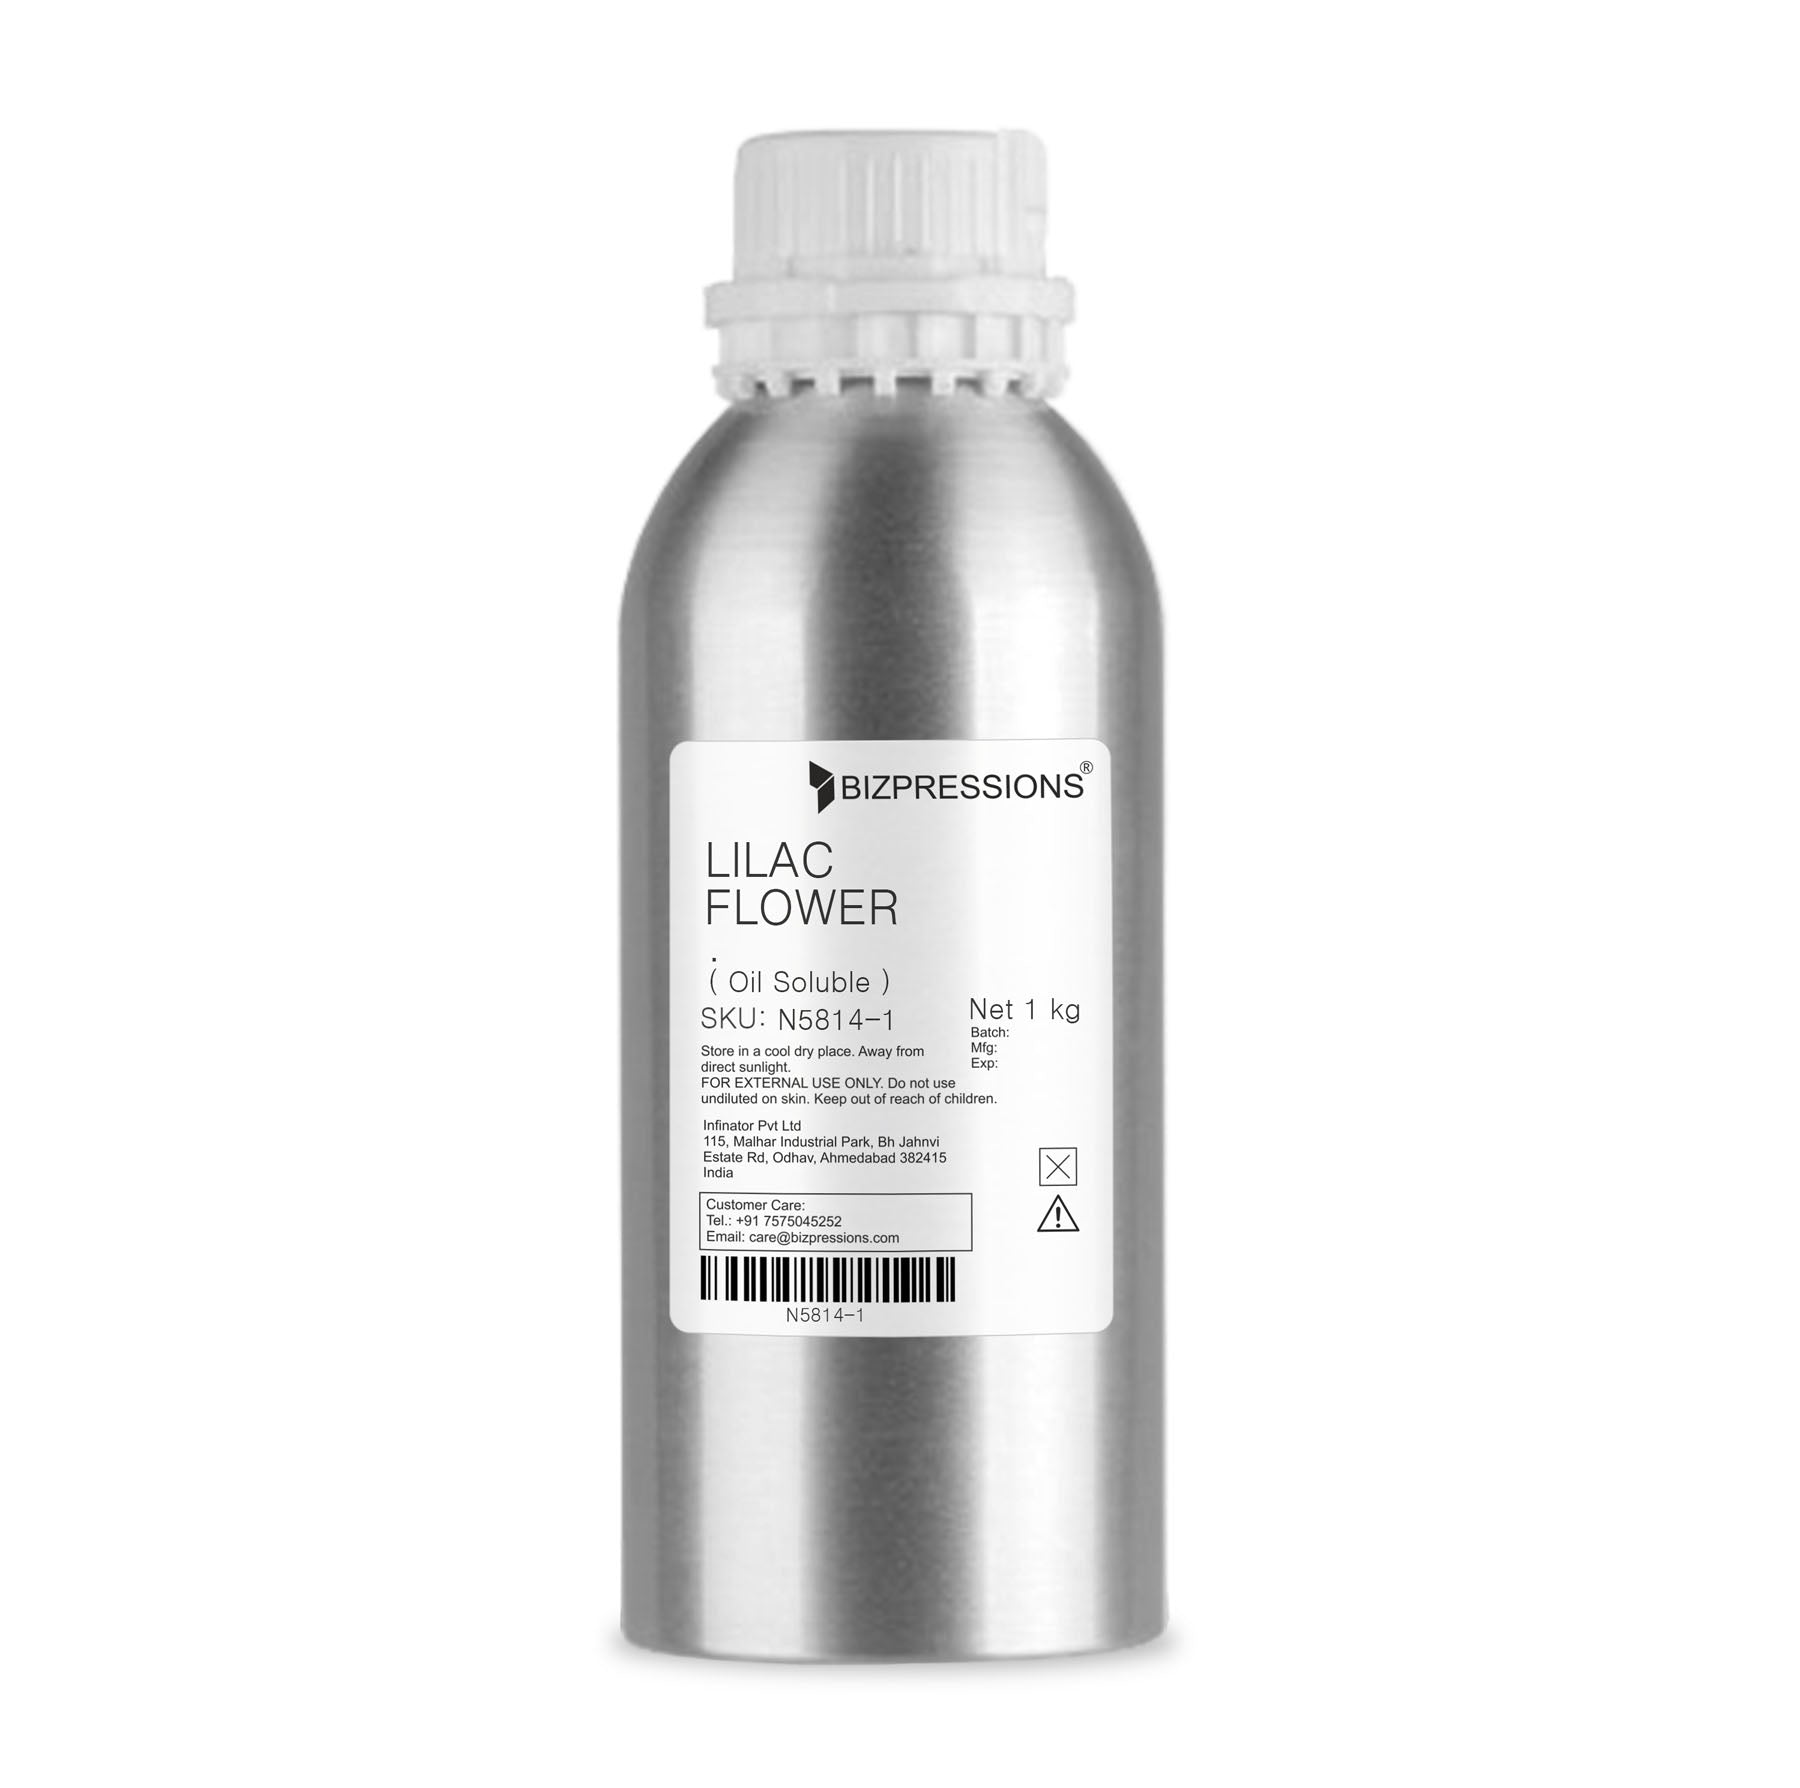 LILAC FLOWER - Fragrance ( Oil Soluble ) - 1 kg